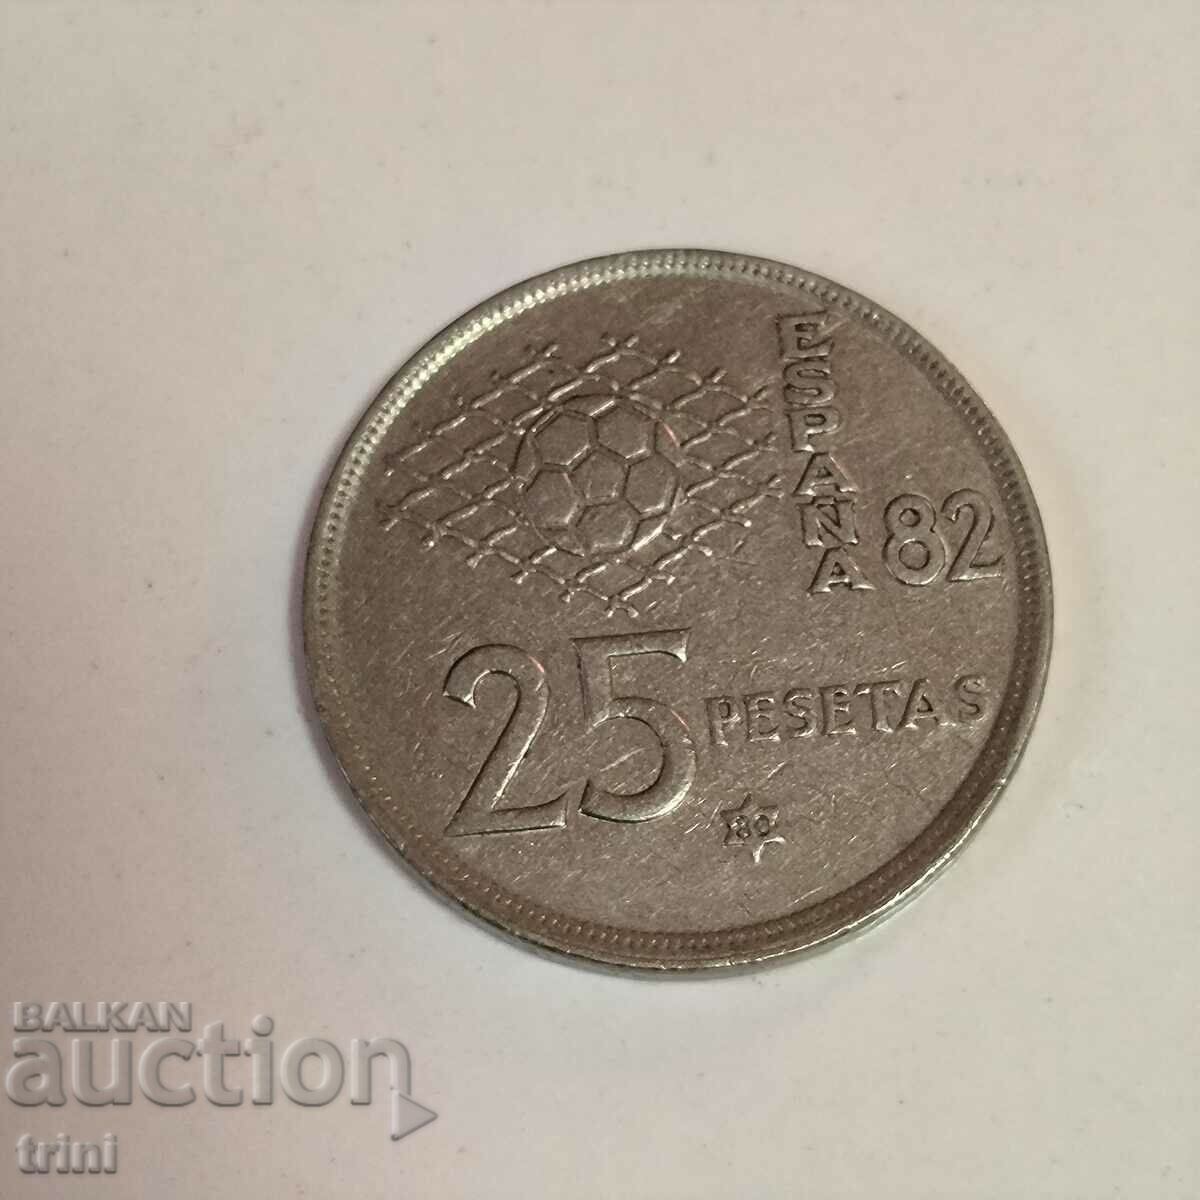 Spain 25 pesetas 1980 year g50